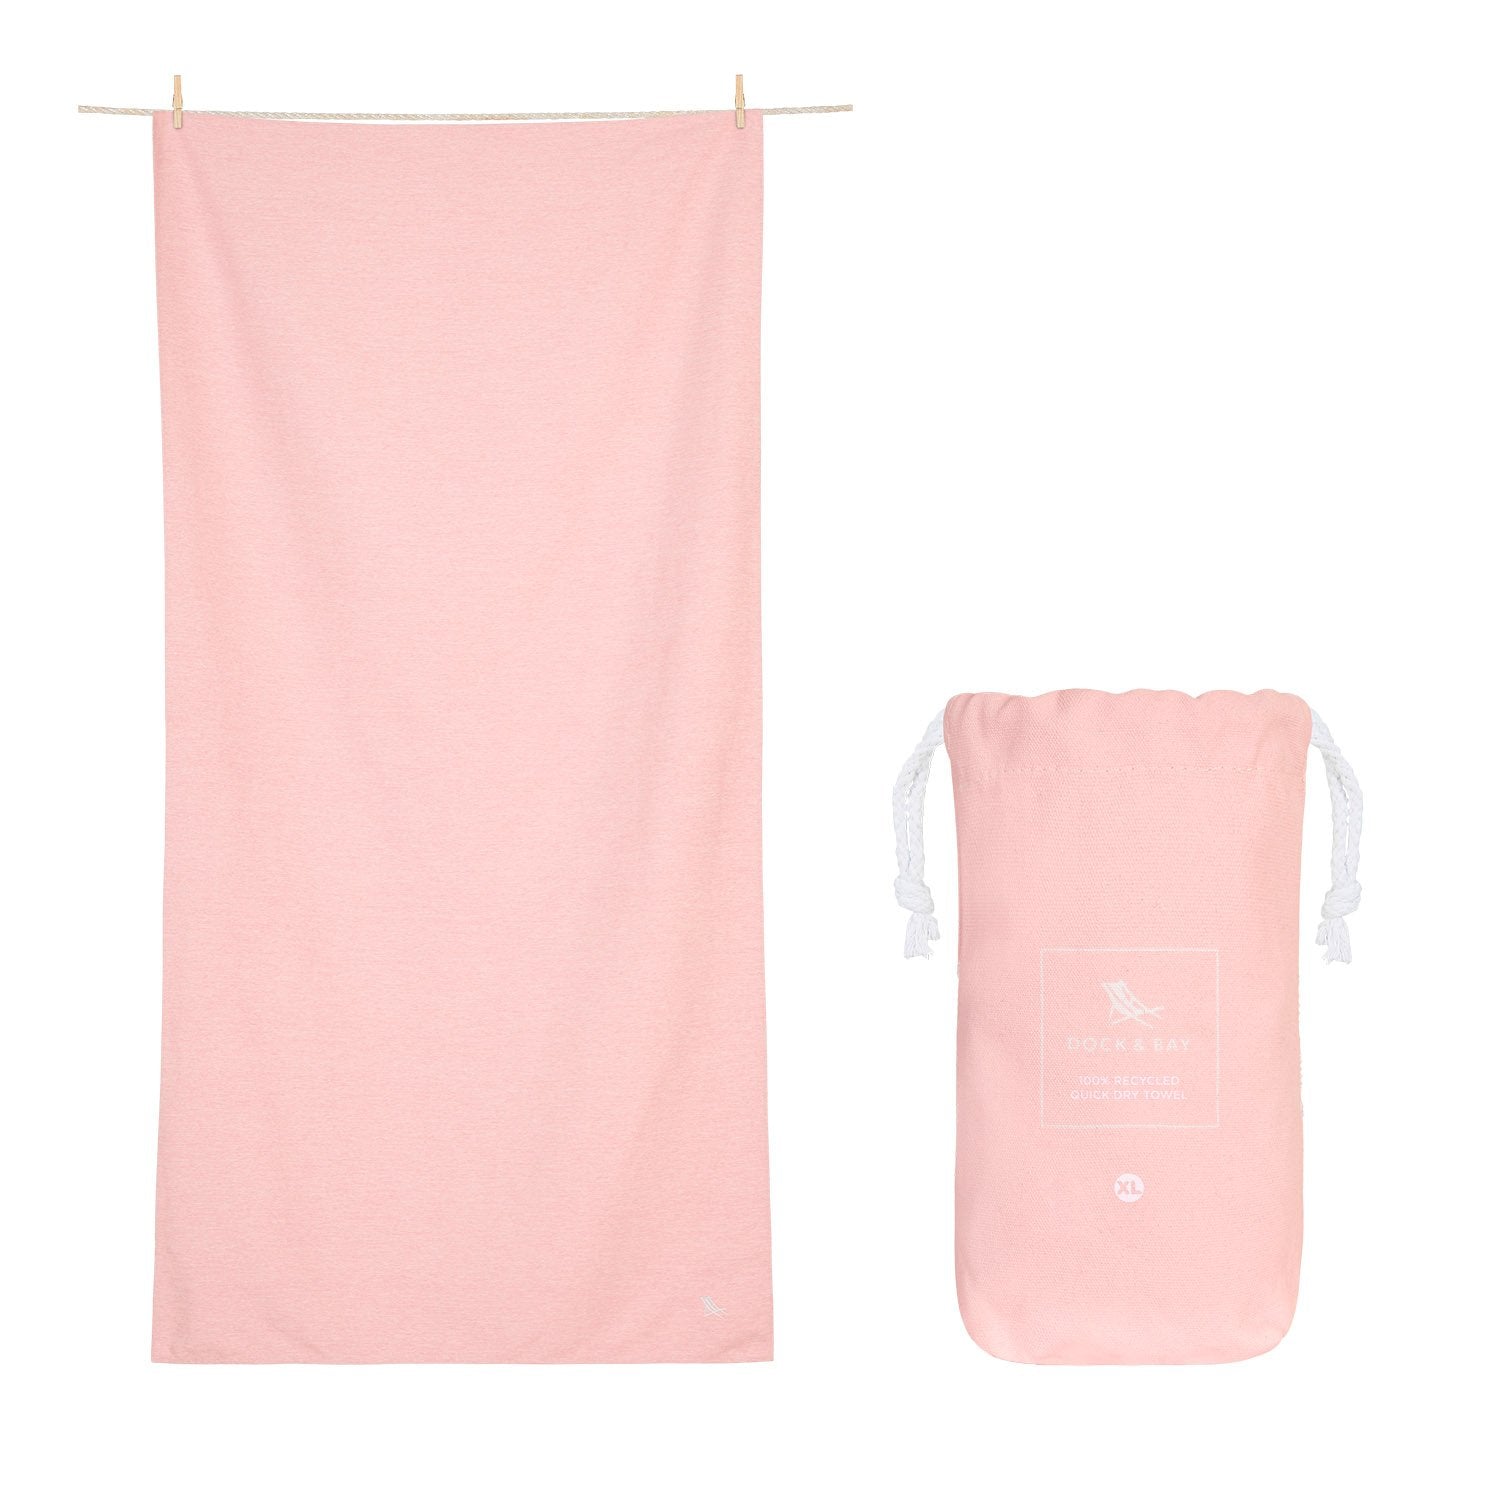 Dock & Bay Travel Towels - Essential - Island Pink